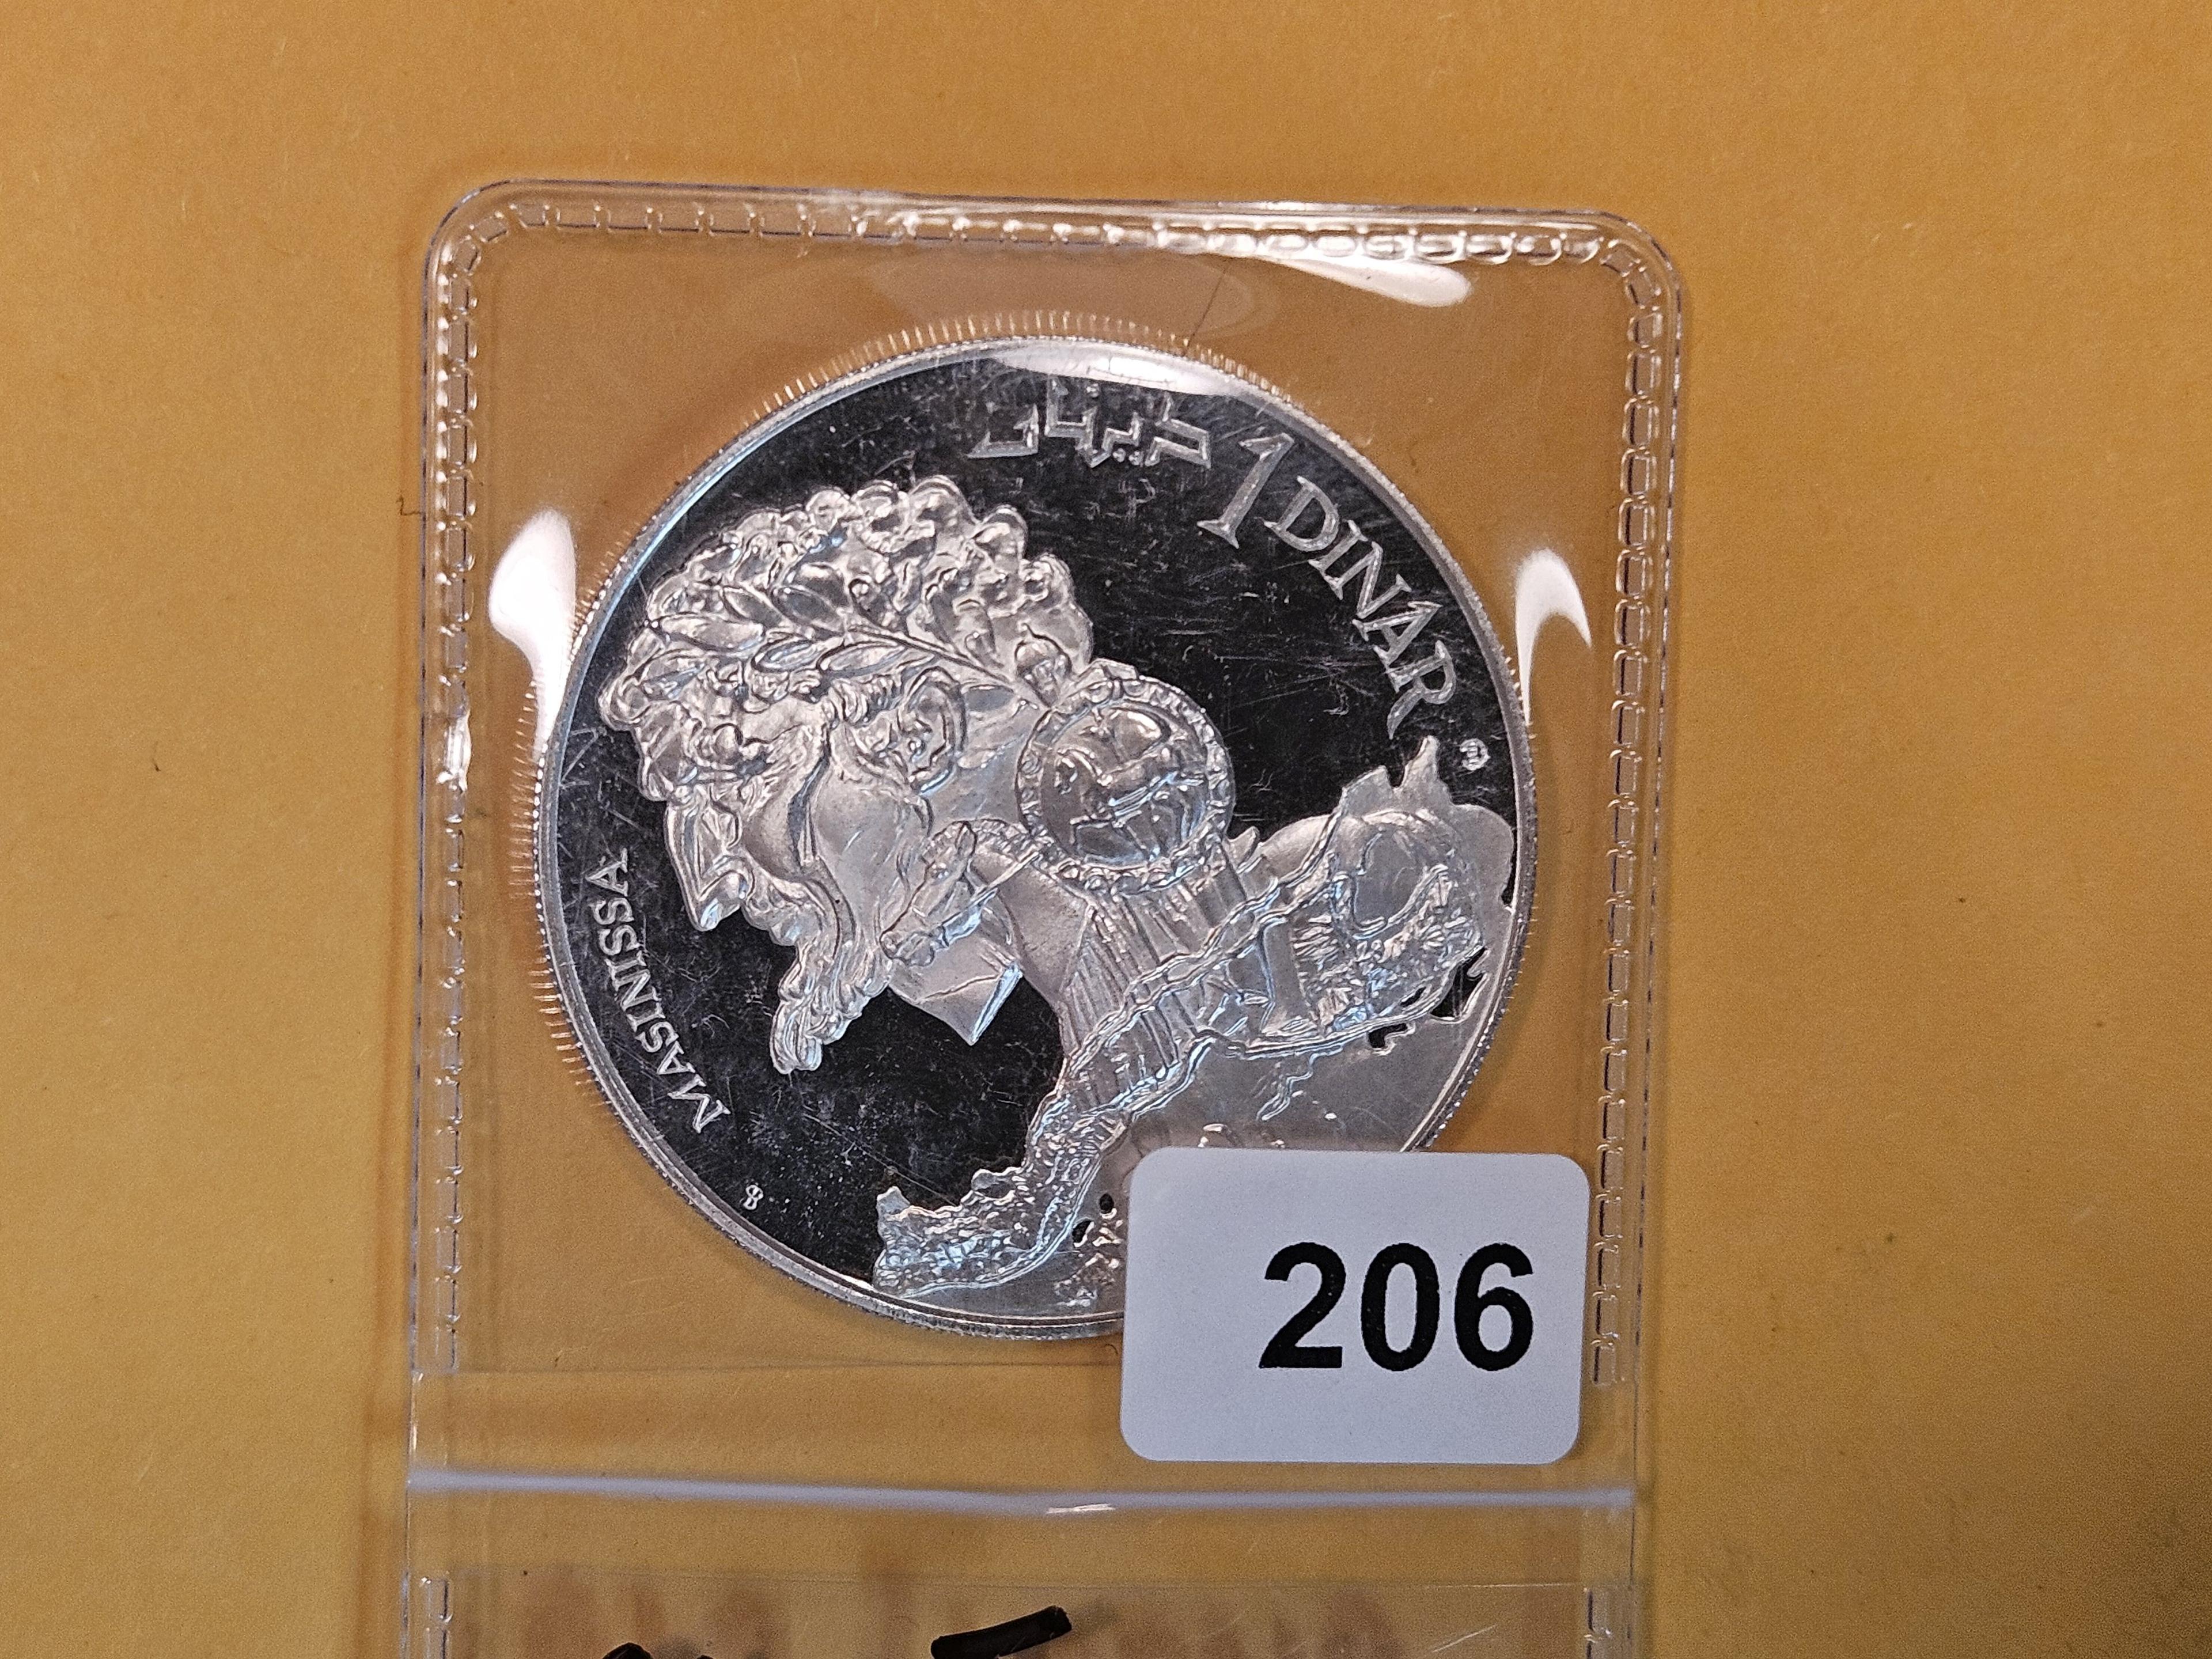 1969 Tunisia GEM Proof Deep Cameo silver 1 dinar